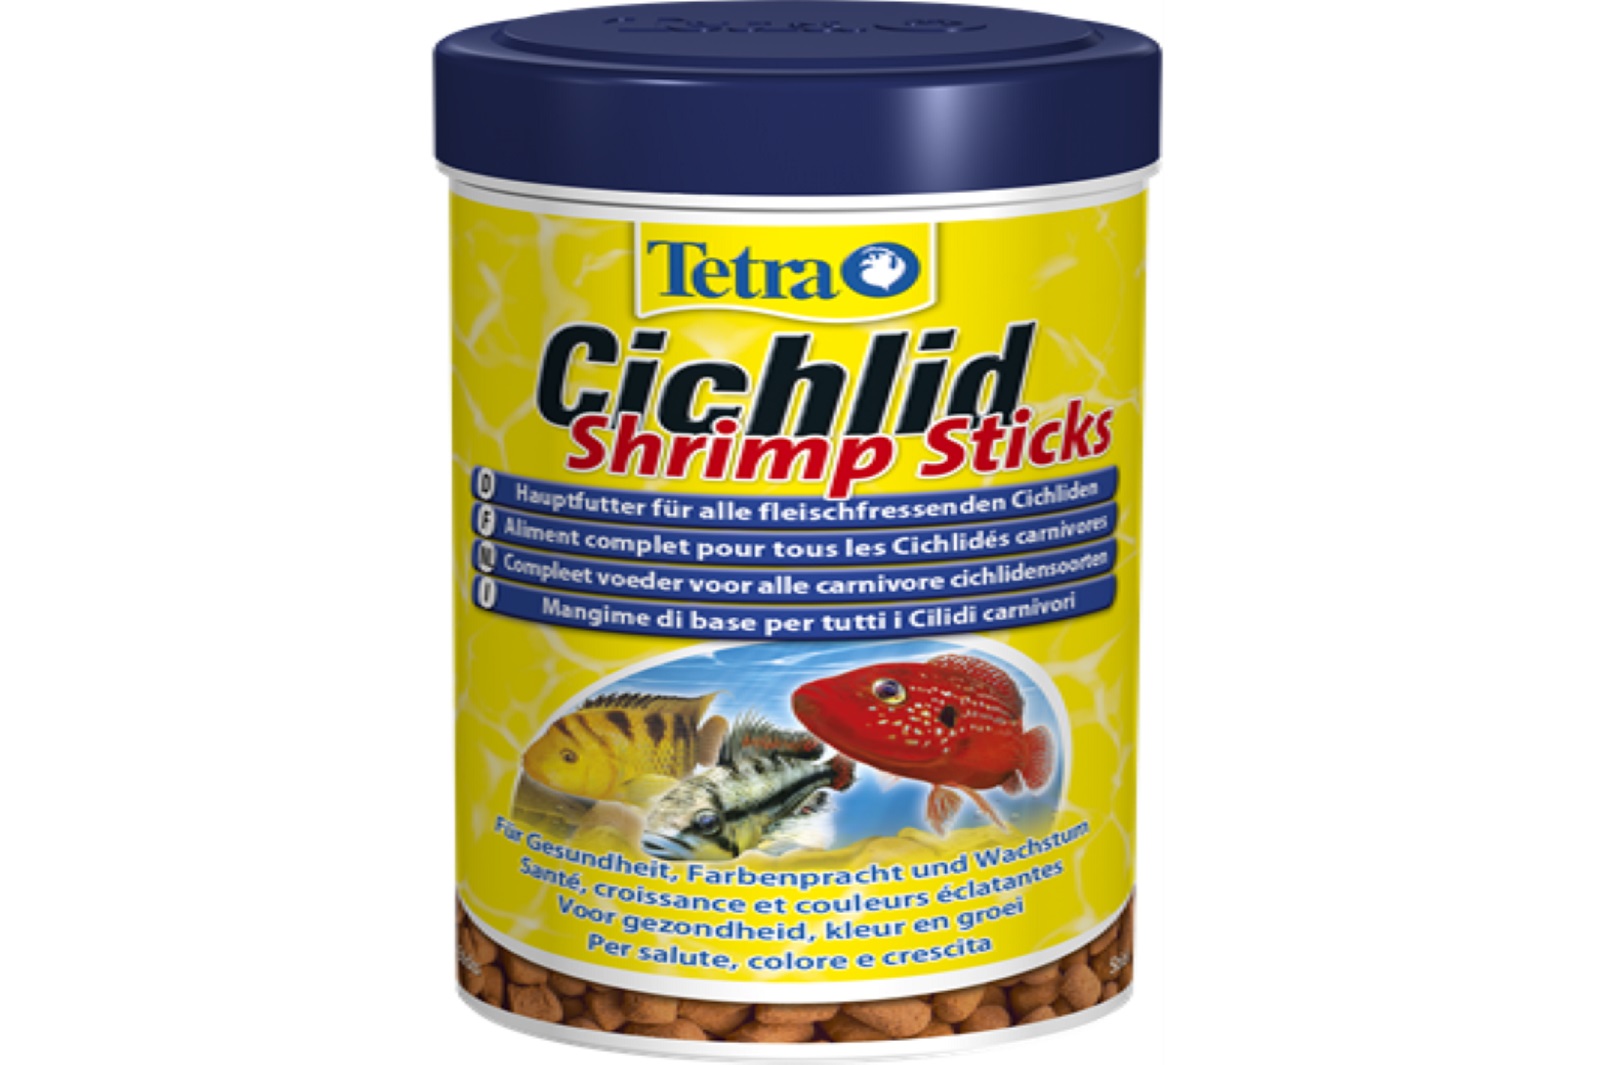 Tetra Cichlid Shrimp Sticks 250 ml Hauptfutter Zierfische